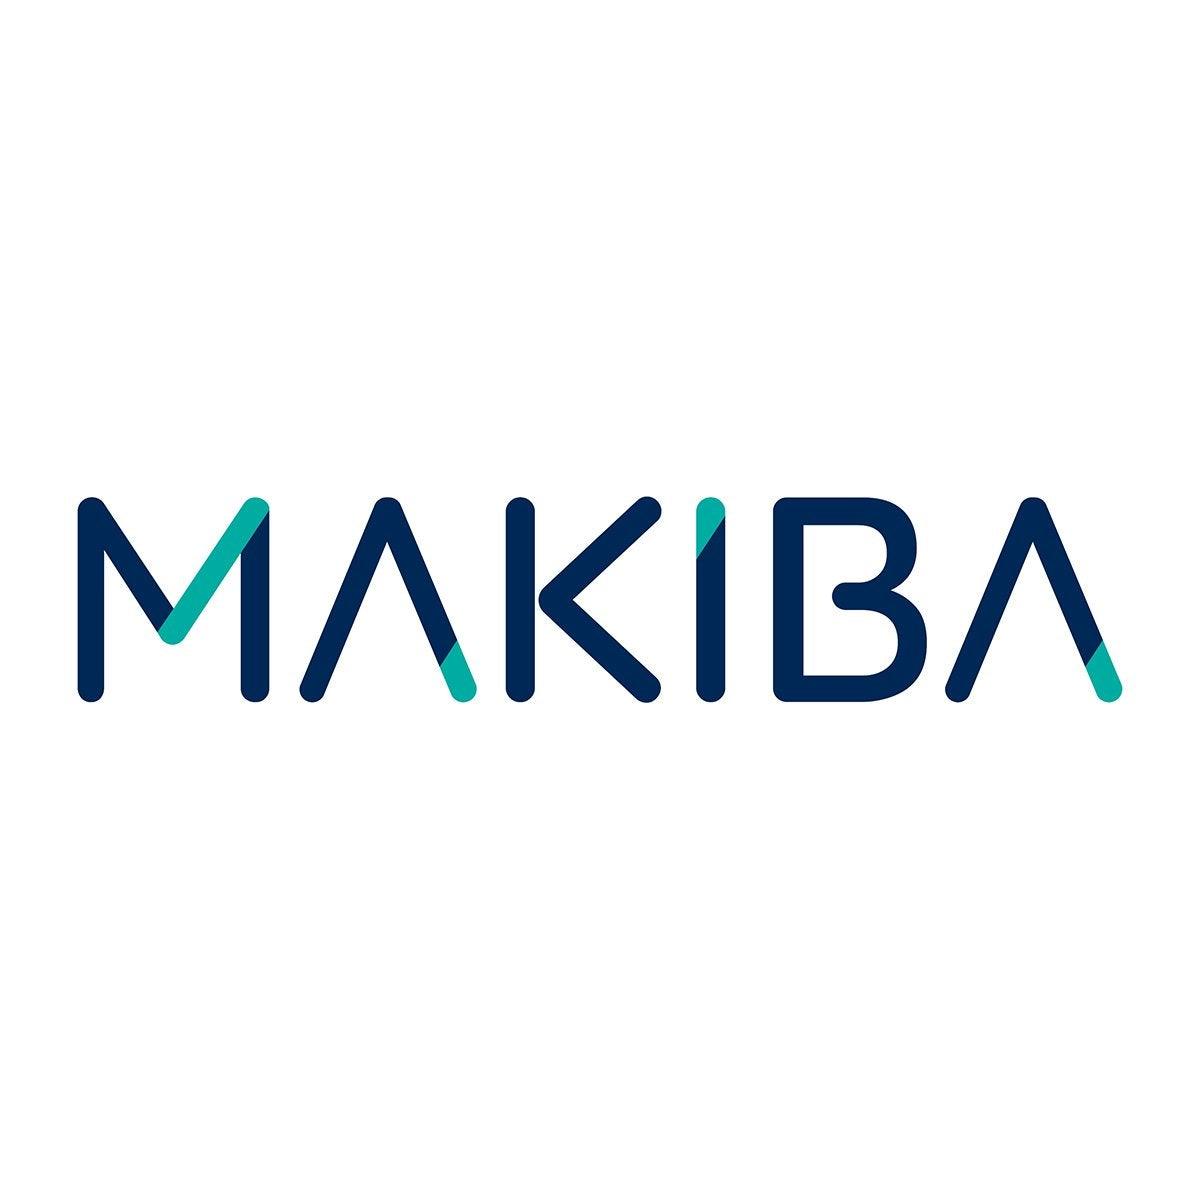 Makiba - 37+ Design